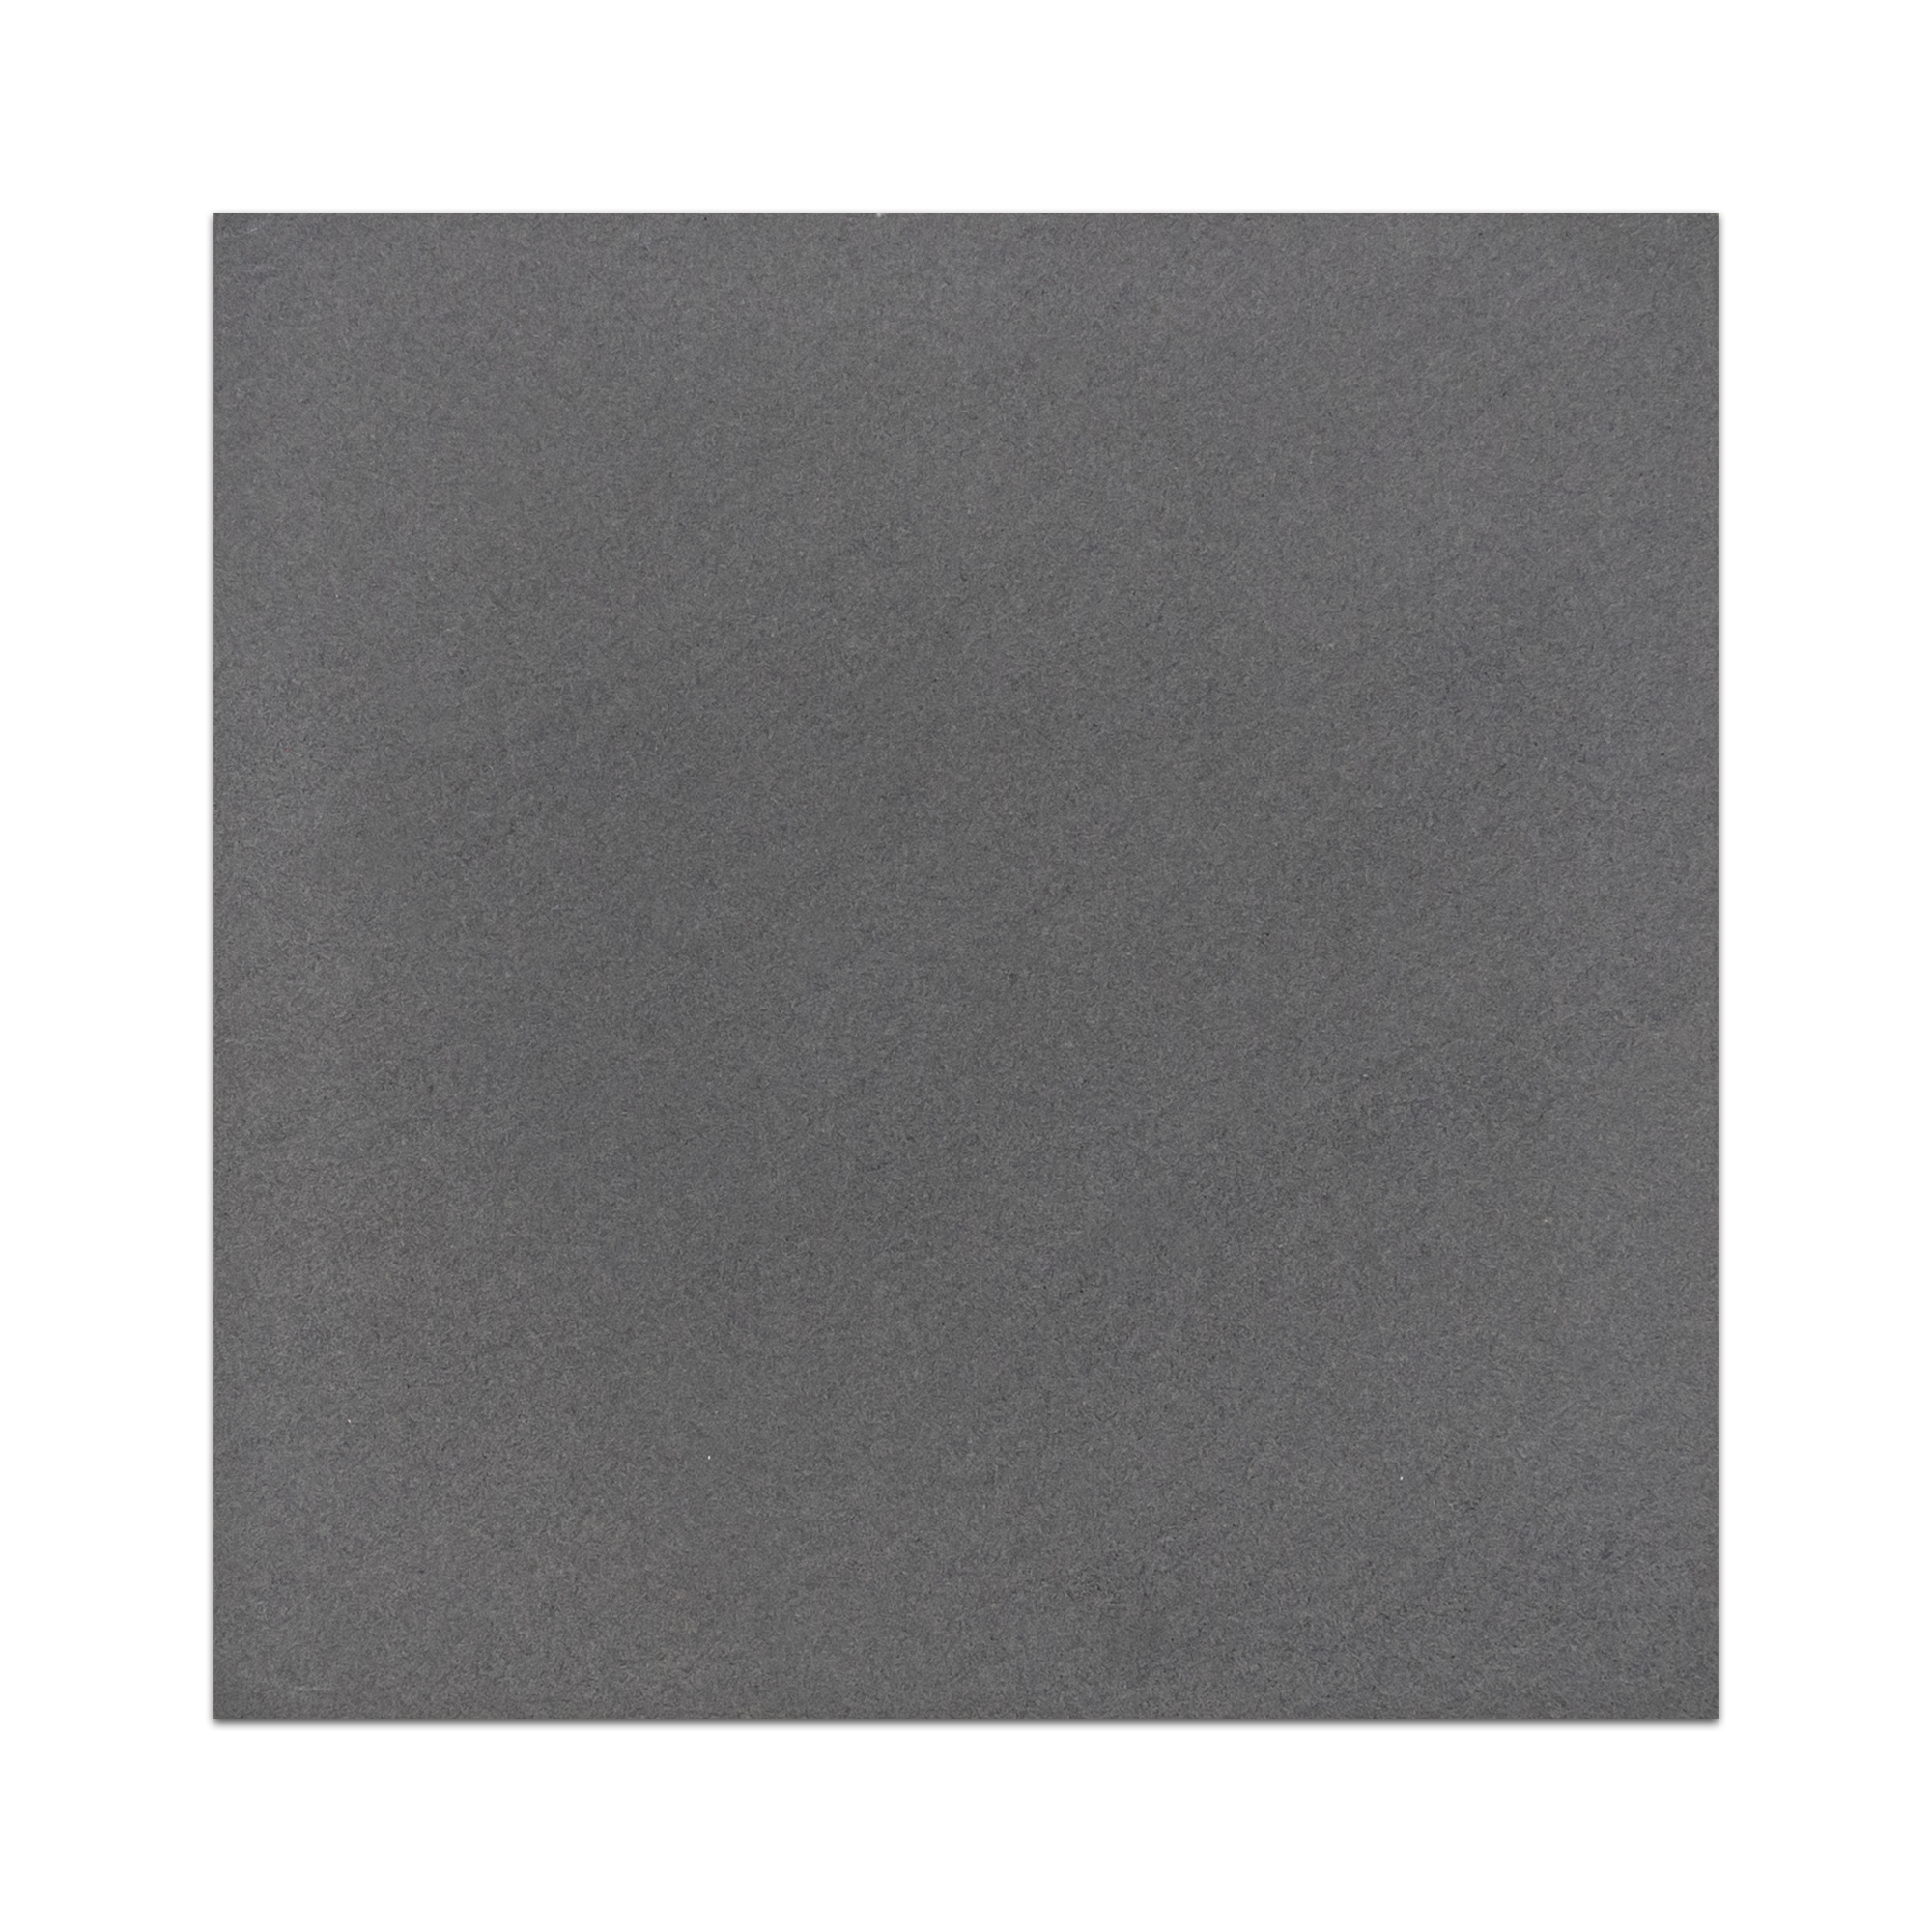 Elon grey basalt square field tile 12x12x0.375 honed VT1212H - Surface Group International